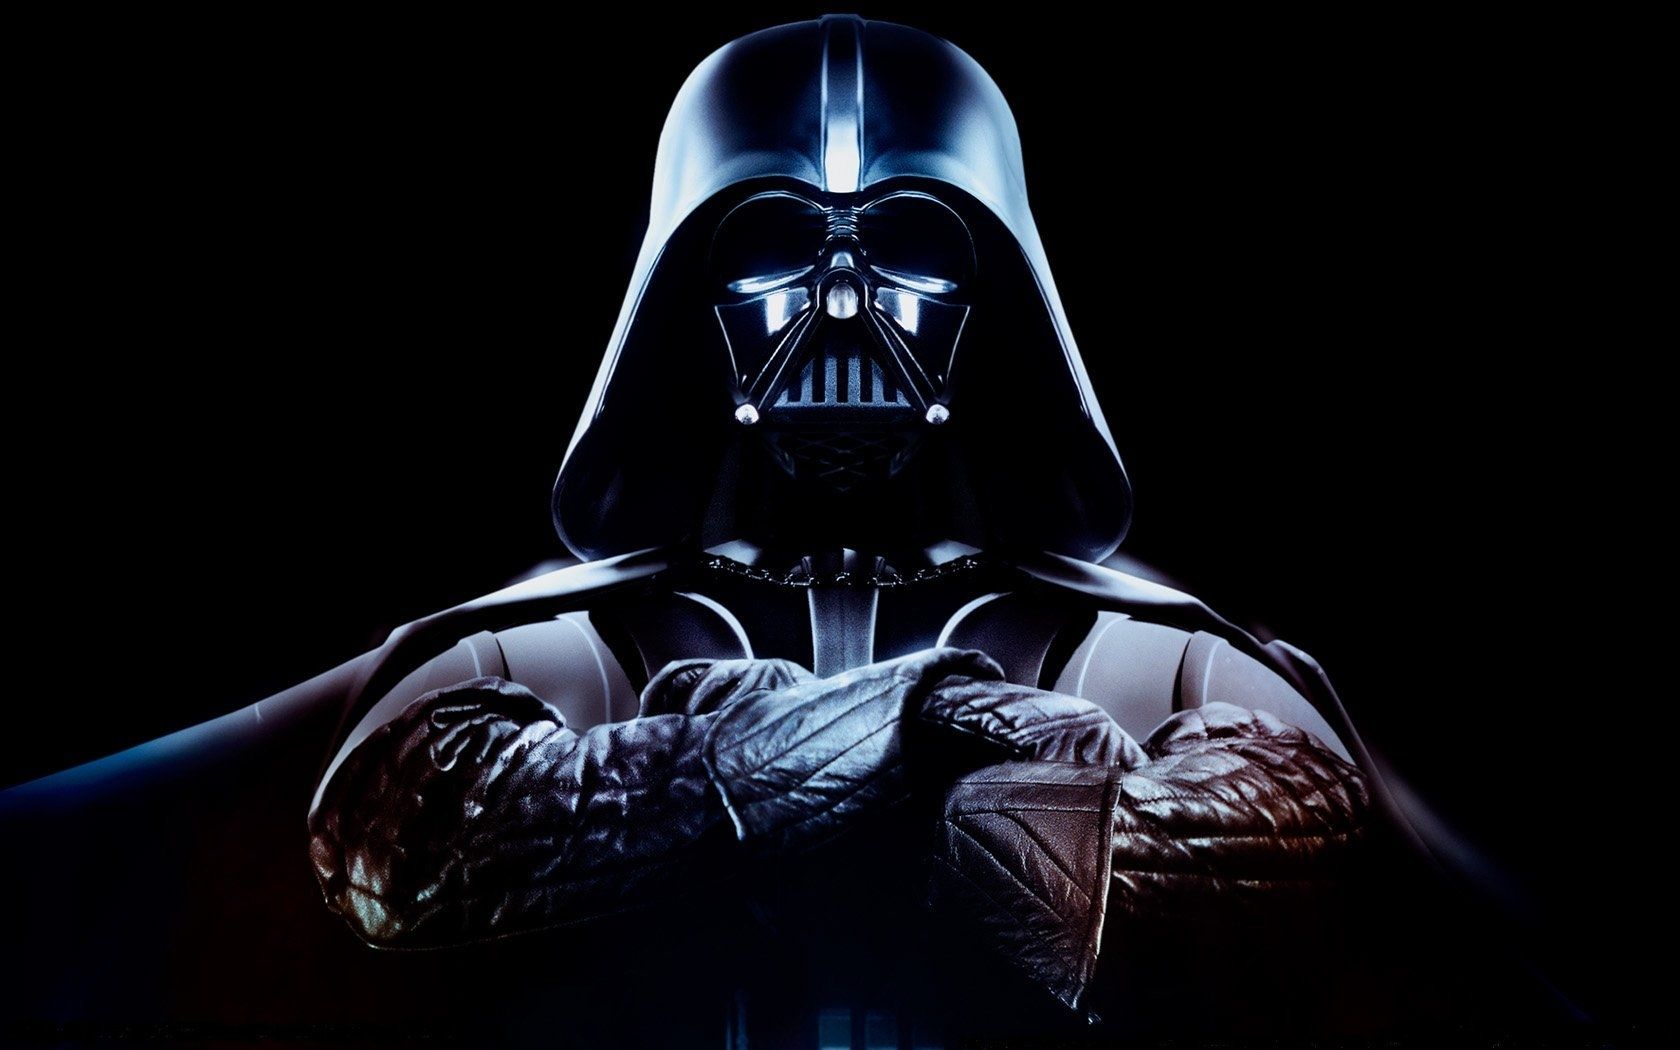 Best Darth Vader Wallpaper HD FULL HD 1080p For PC Background. Darth vader wallpaper, Vader star wars, Star wars art